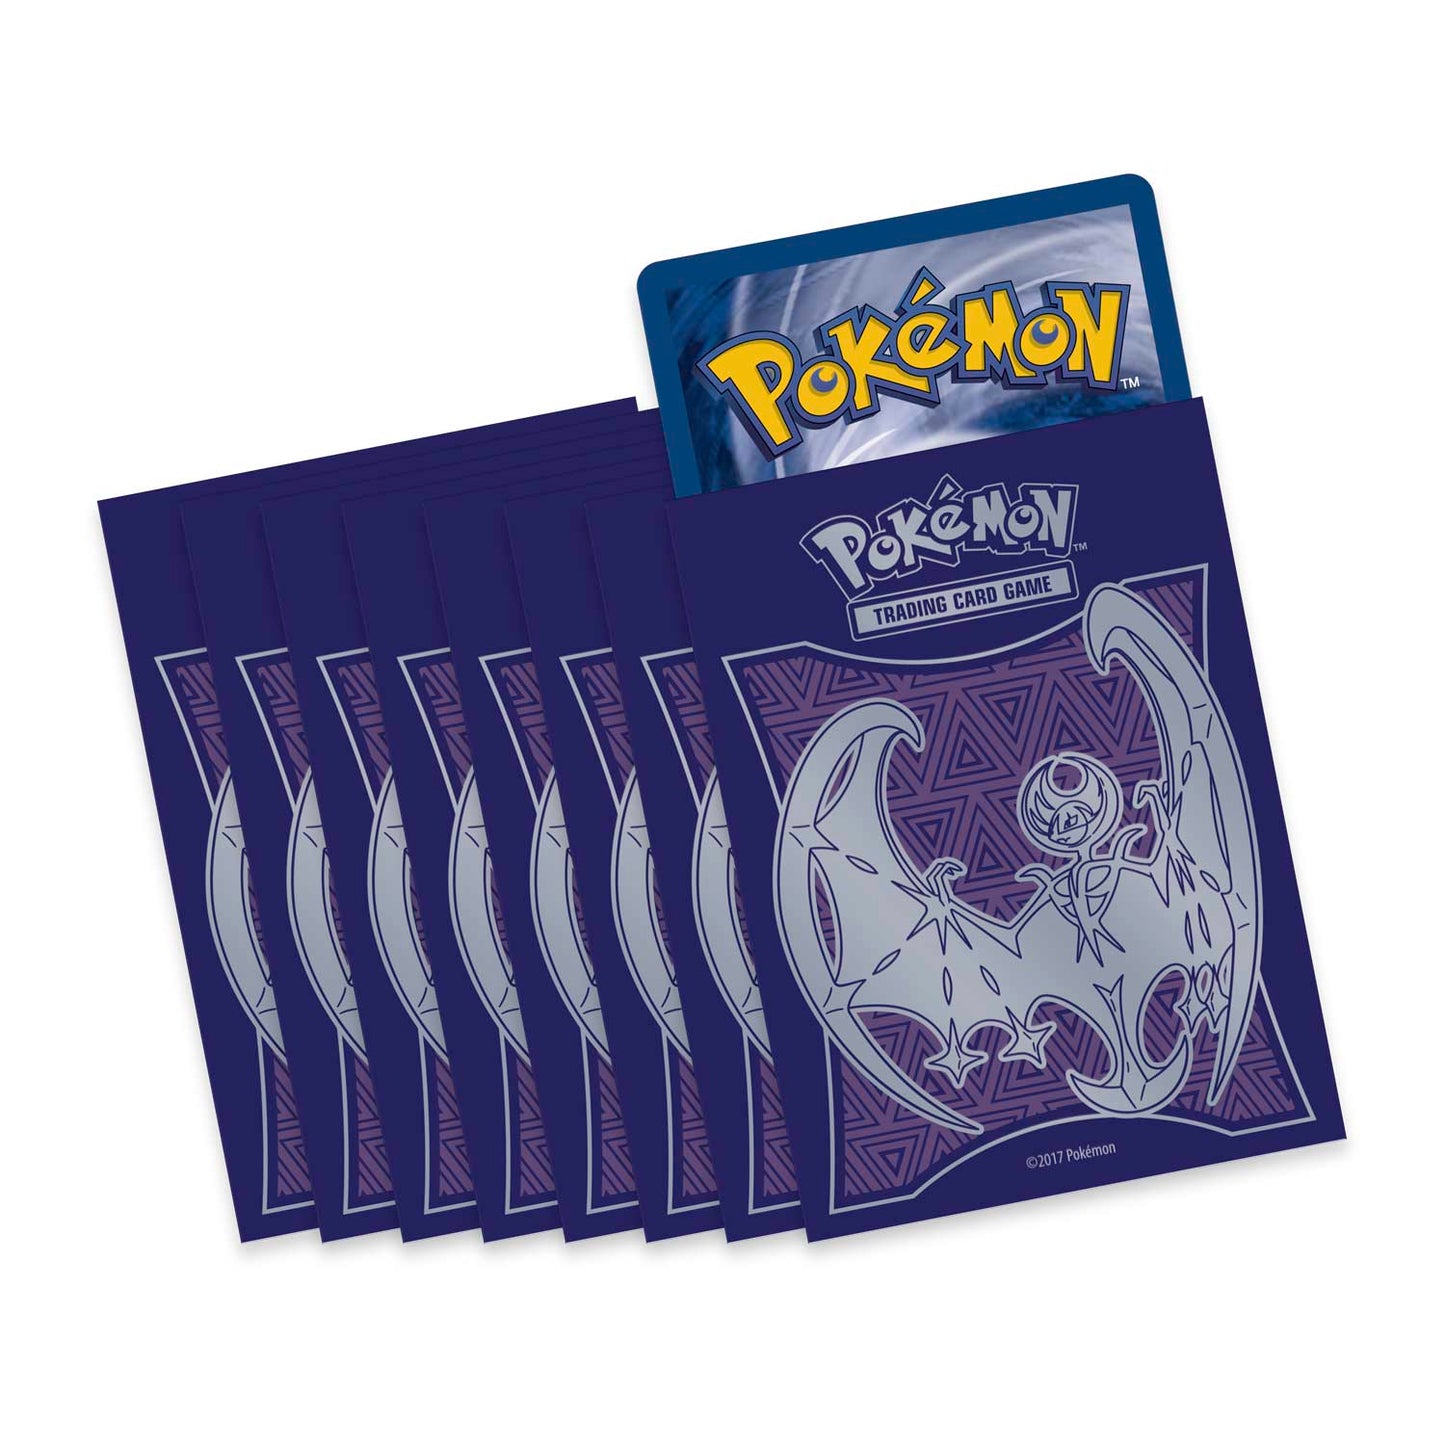 Pokémon Trading Card Game Official Card Sleeves x65 - Lunala